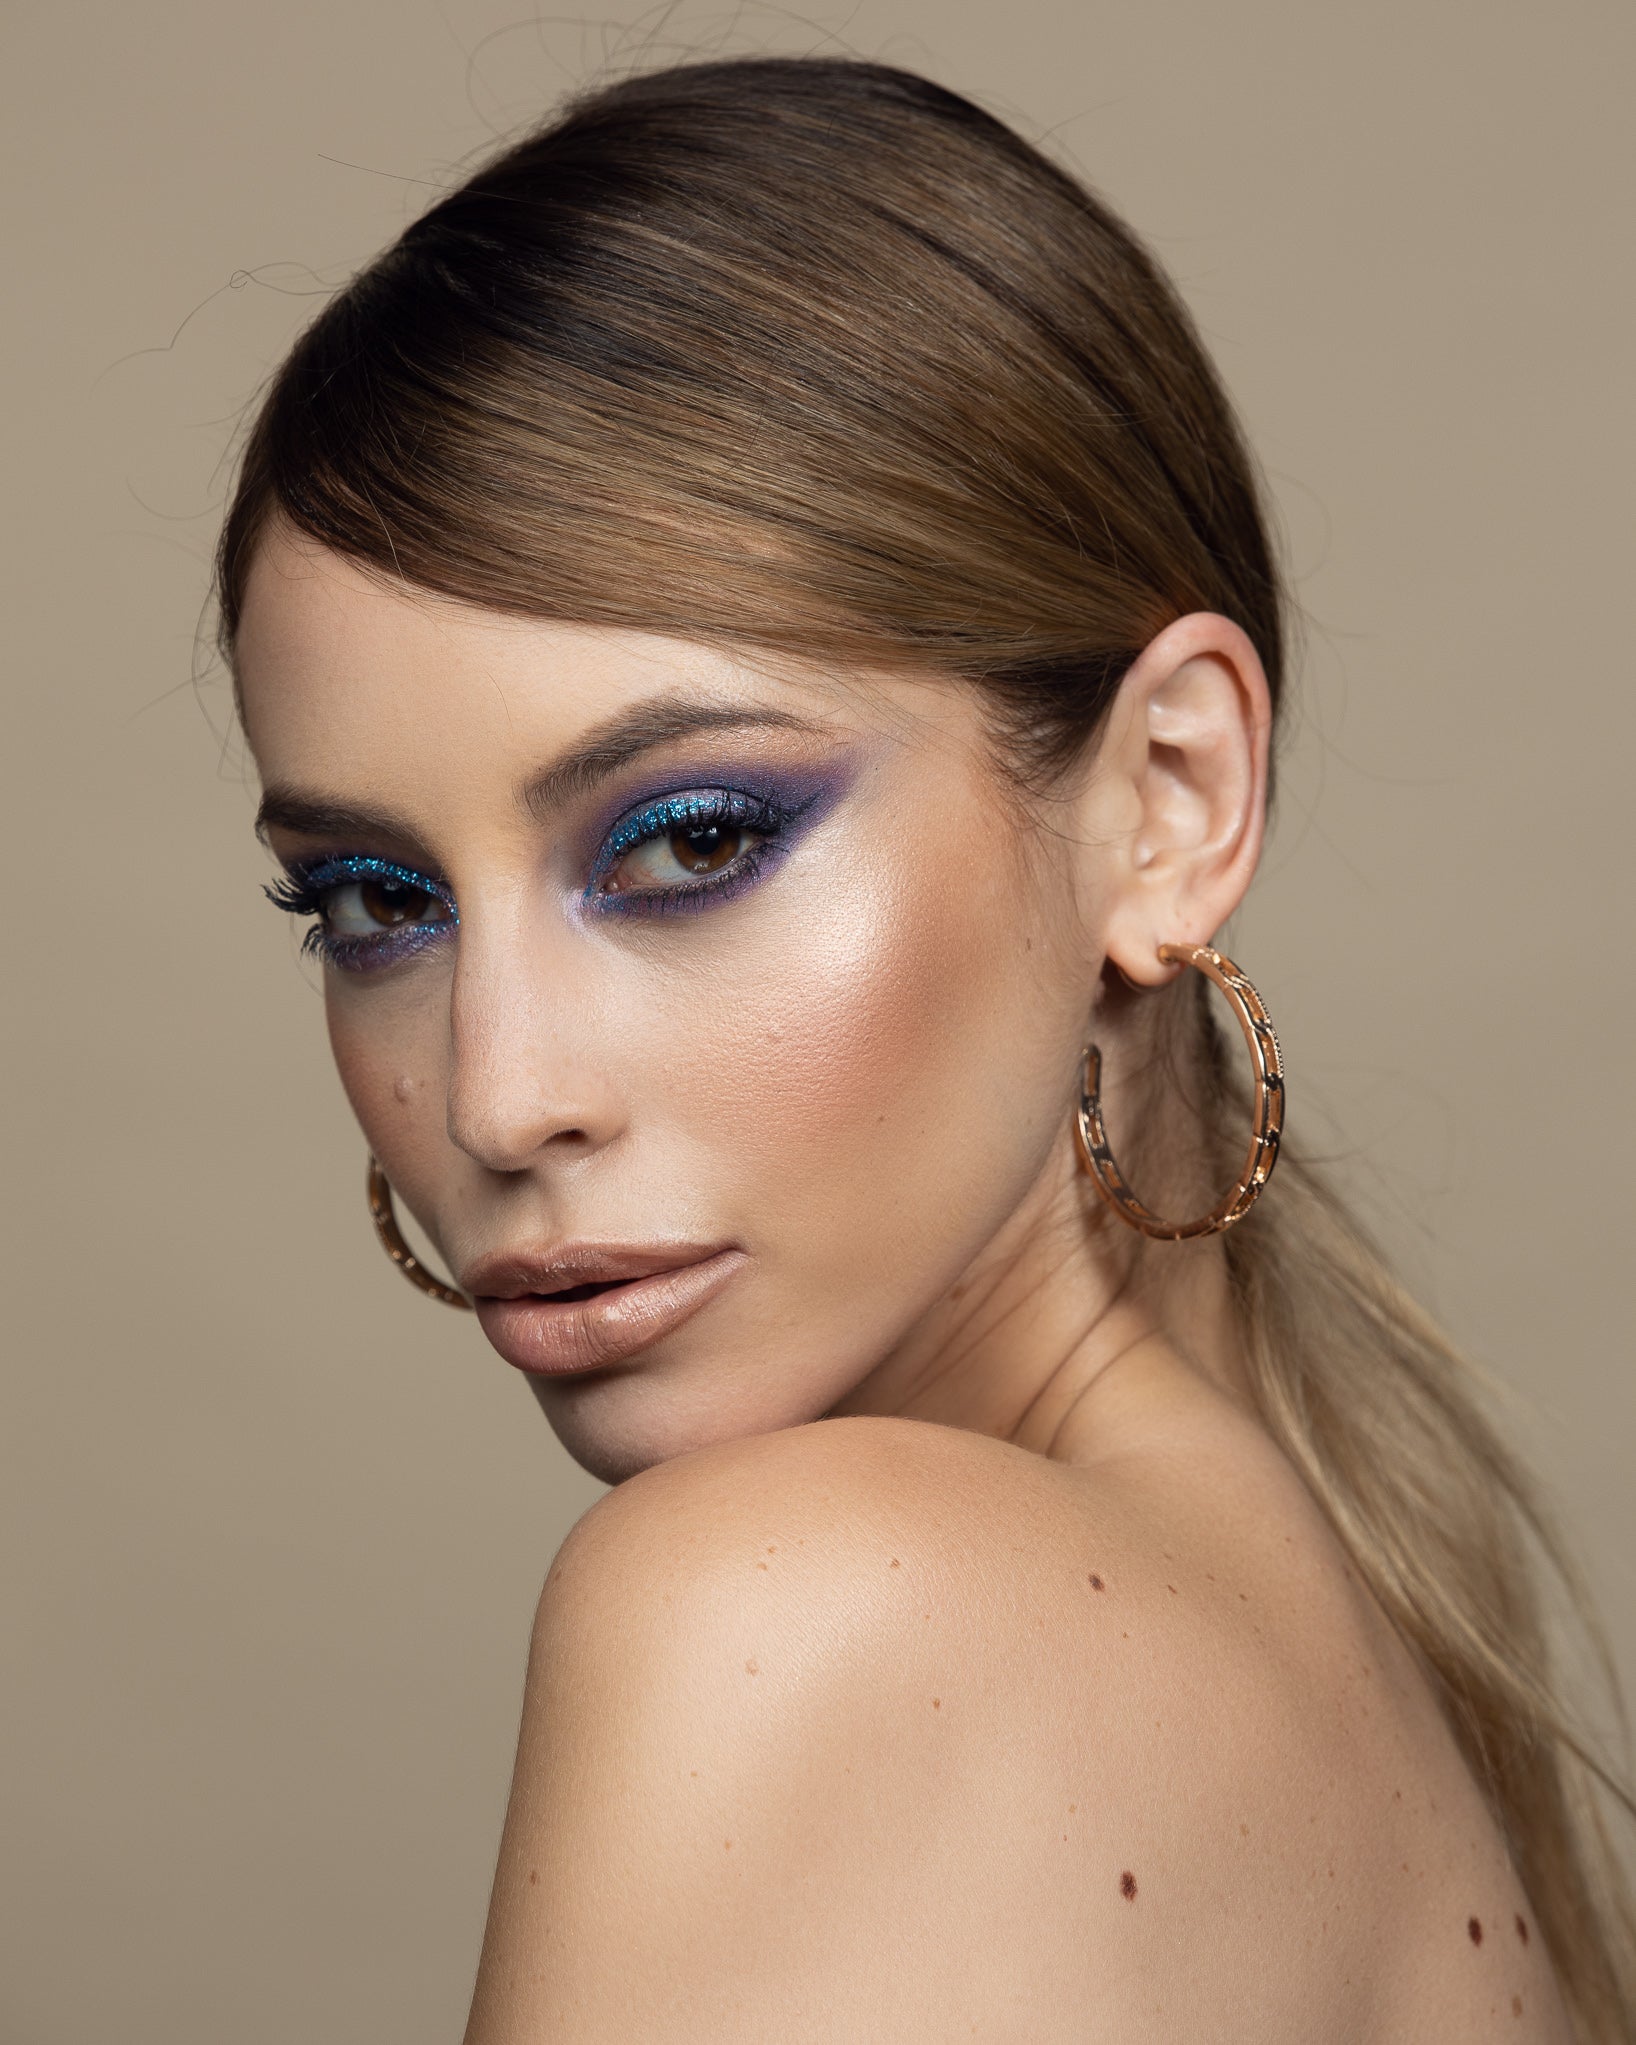 Beauty makeup Studio Headshot professional portrait photographer photography Johannesburg 